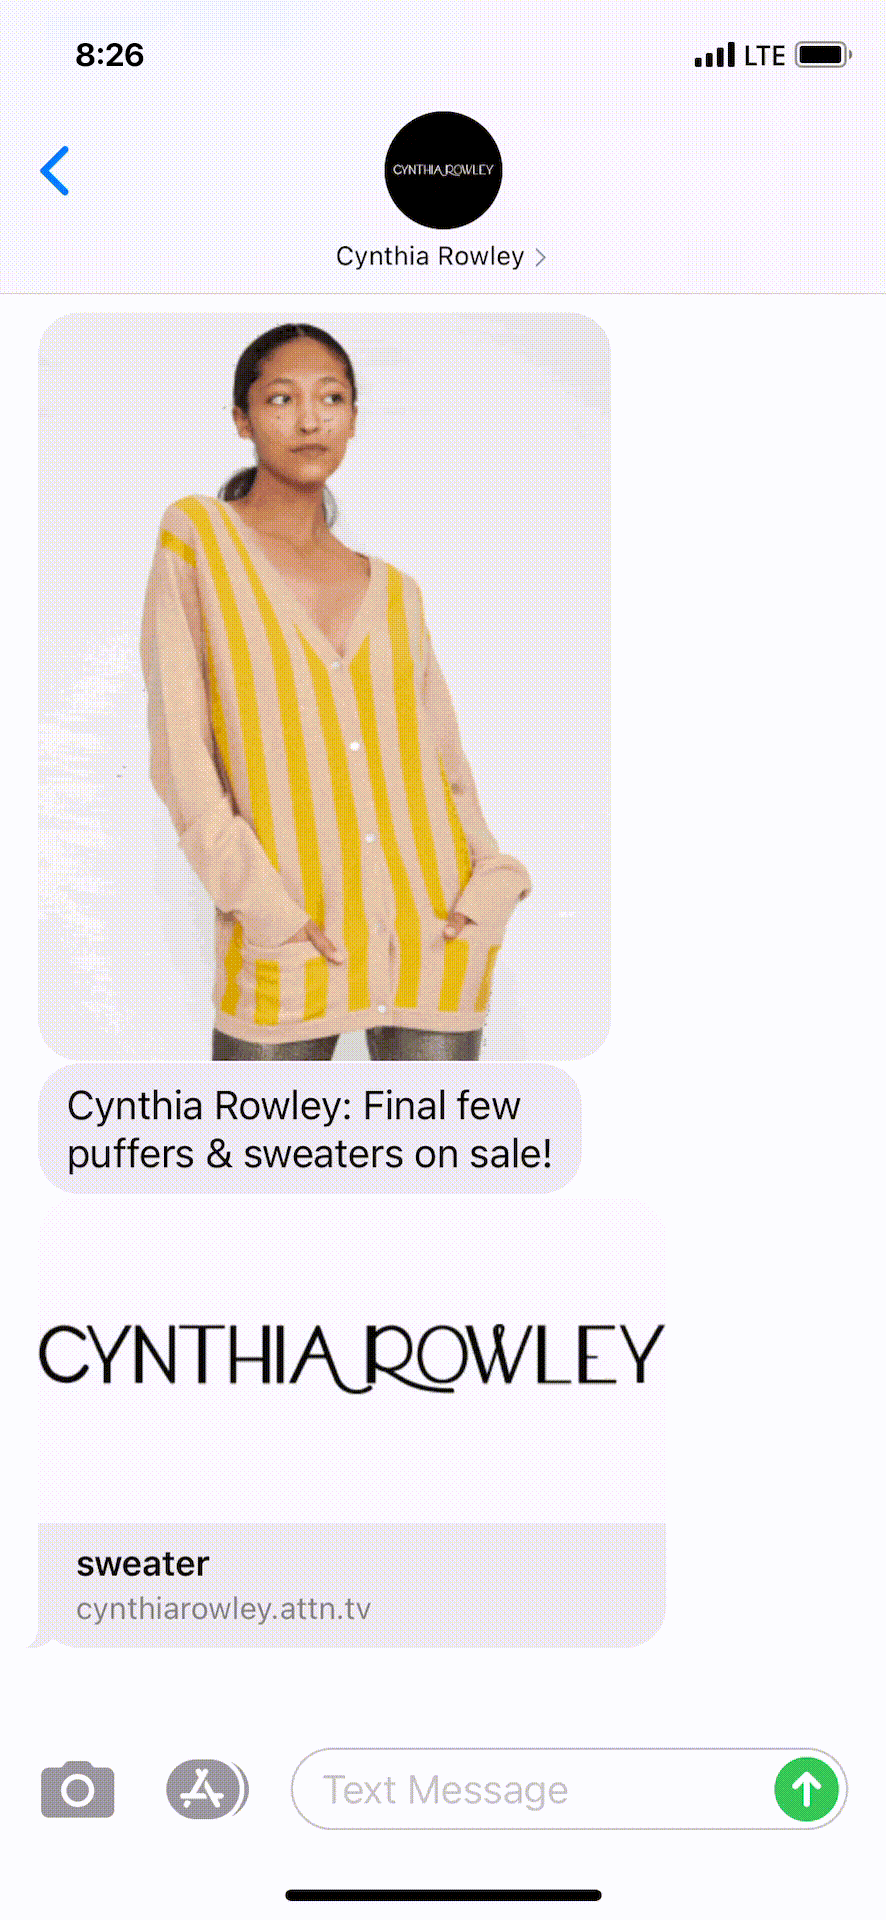 Cynthia-Rowley-Text-Message-Marketing-Example-03.13.2021